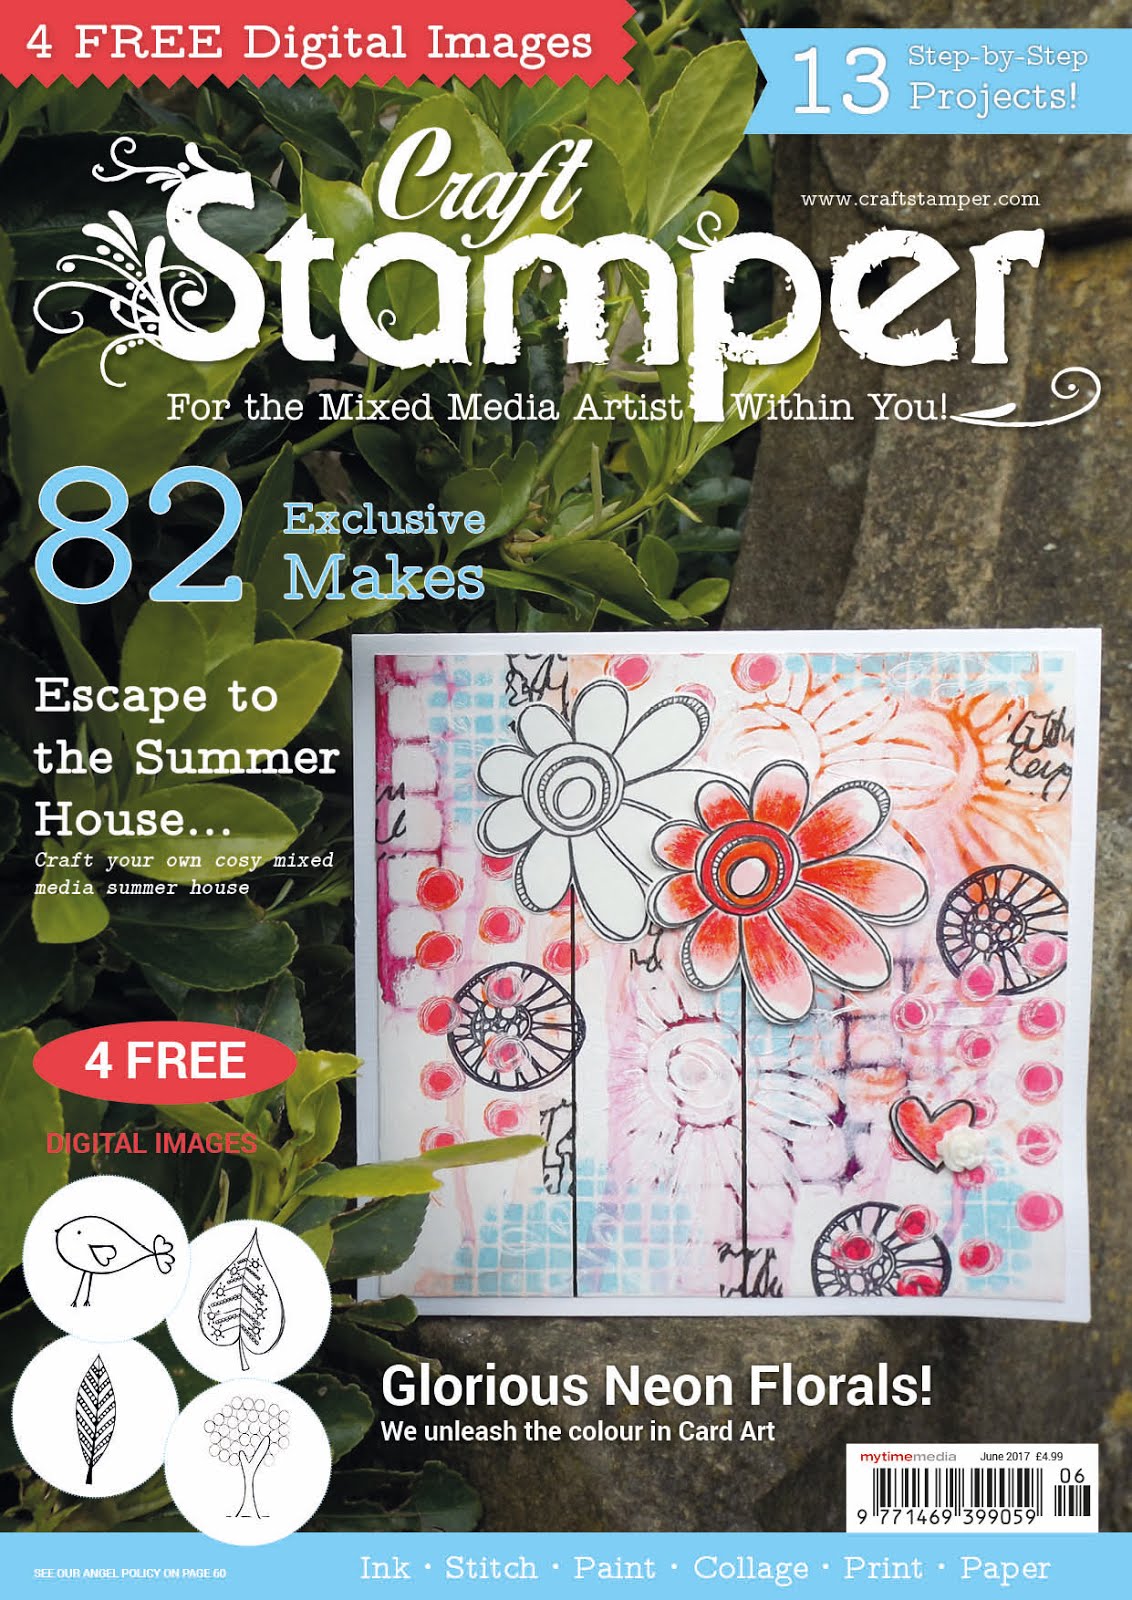 Published in Craft Stamper magazine